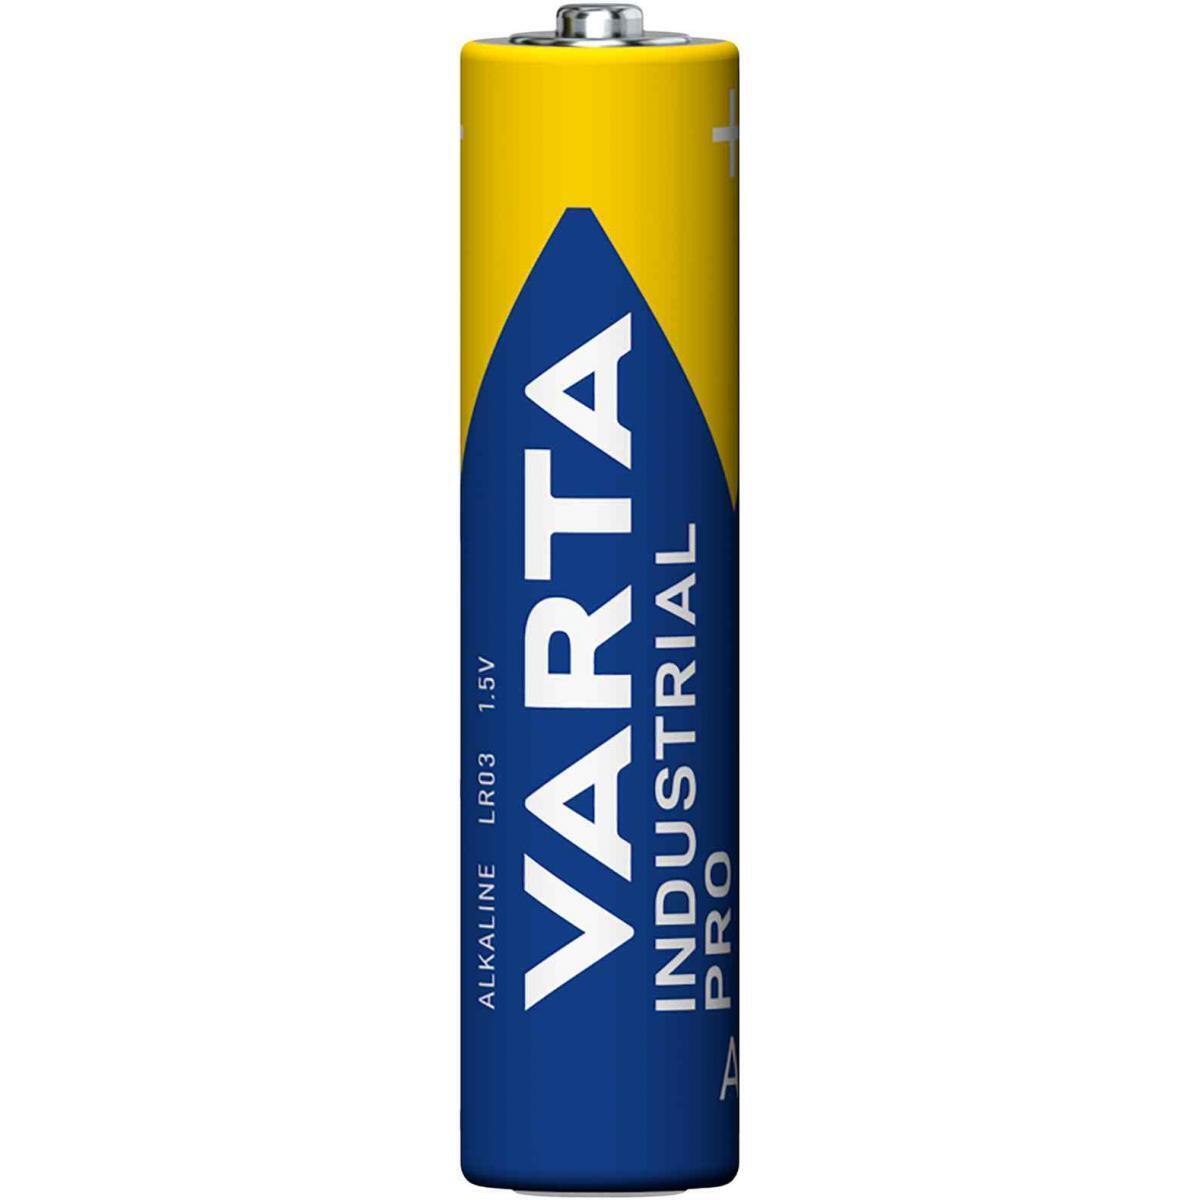 Varta Micro Batterie 4003 211 111 Industrial PRO in 10er Box